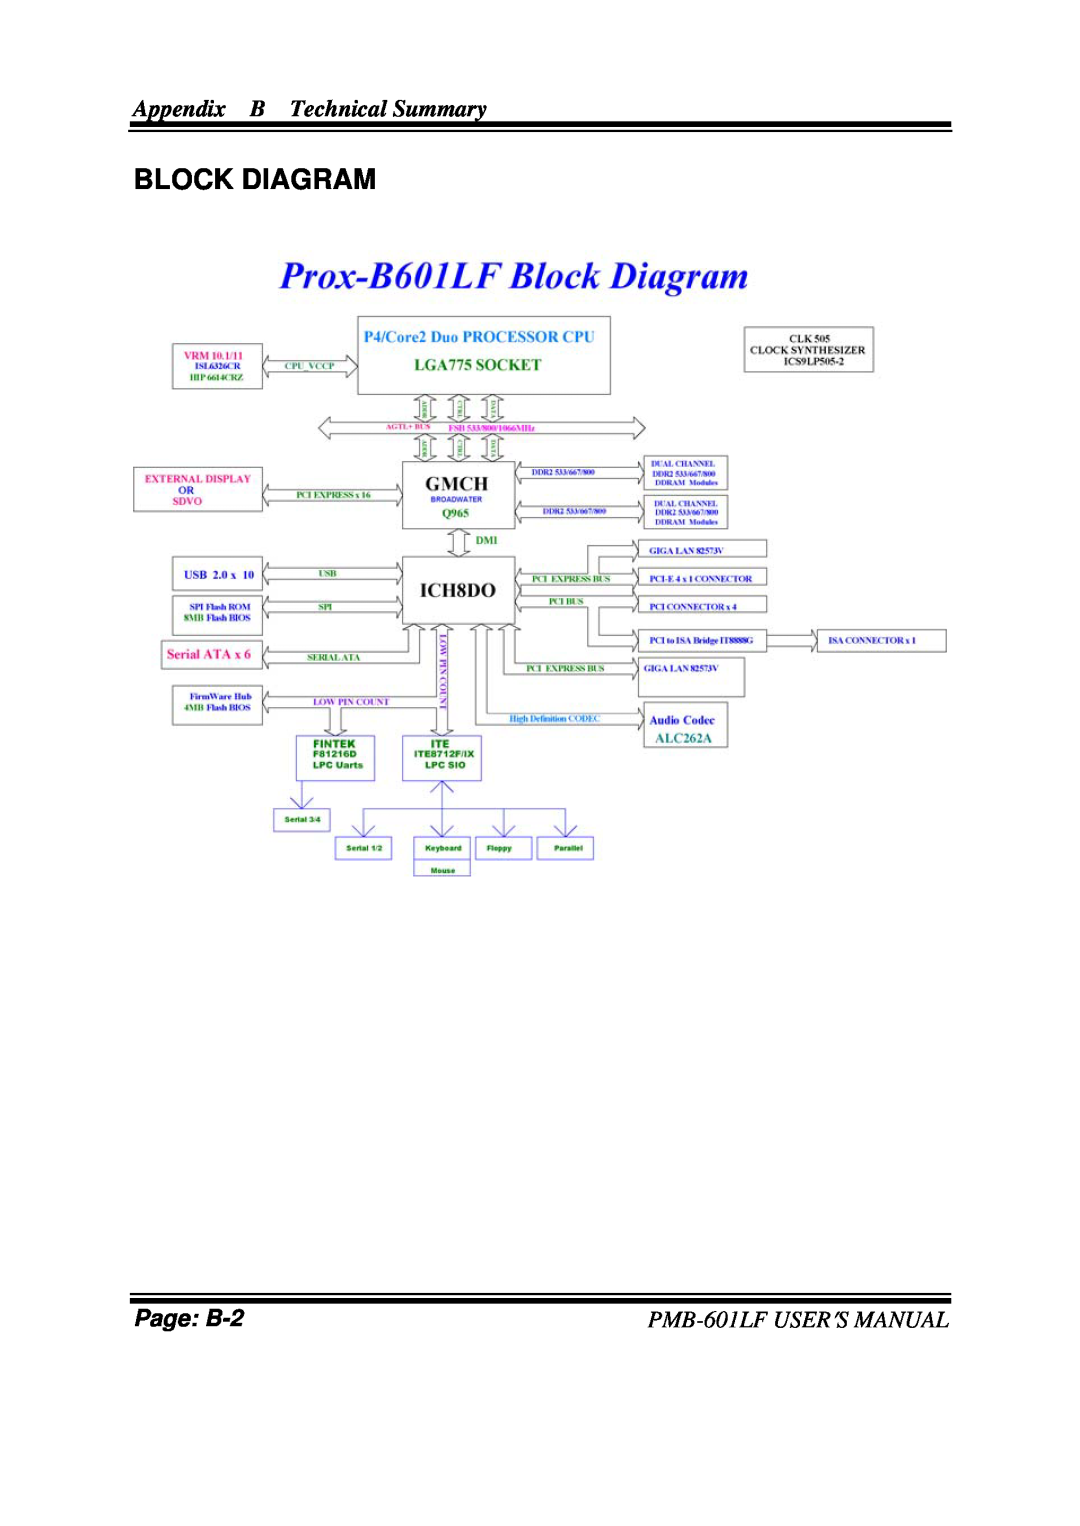 Intel user manual Block Diagram, Page B-2, Appendix B Technical Summary, PMB-601LFUSER′S MANUAL 